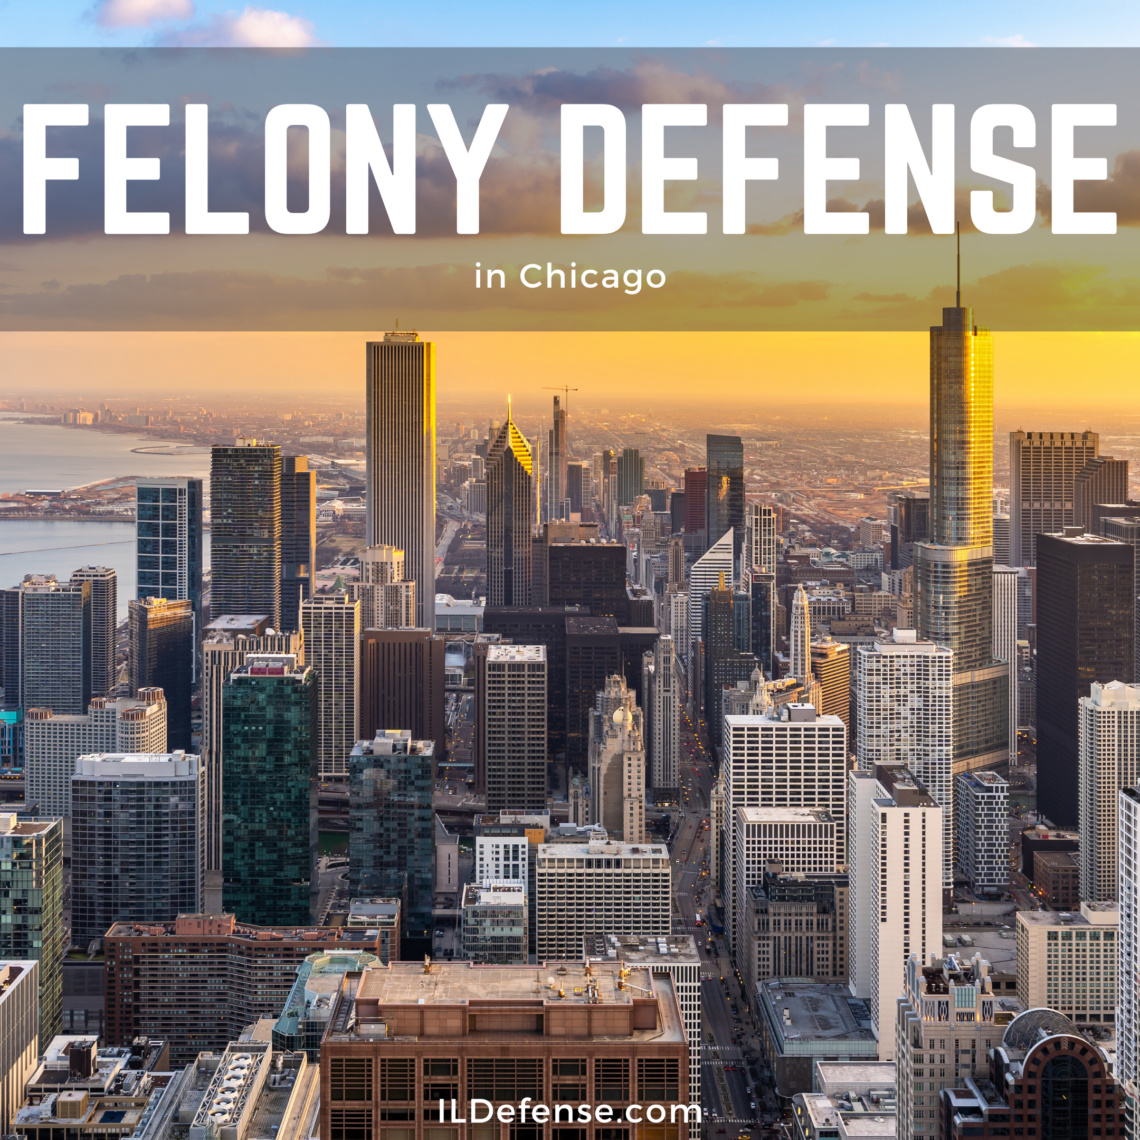 Felony Defense in Chicago